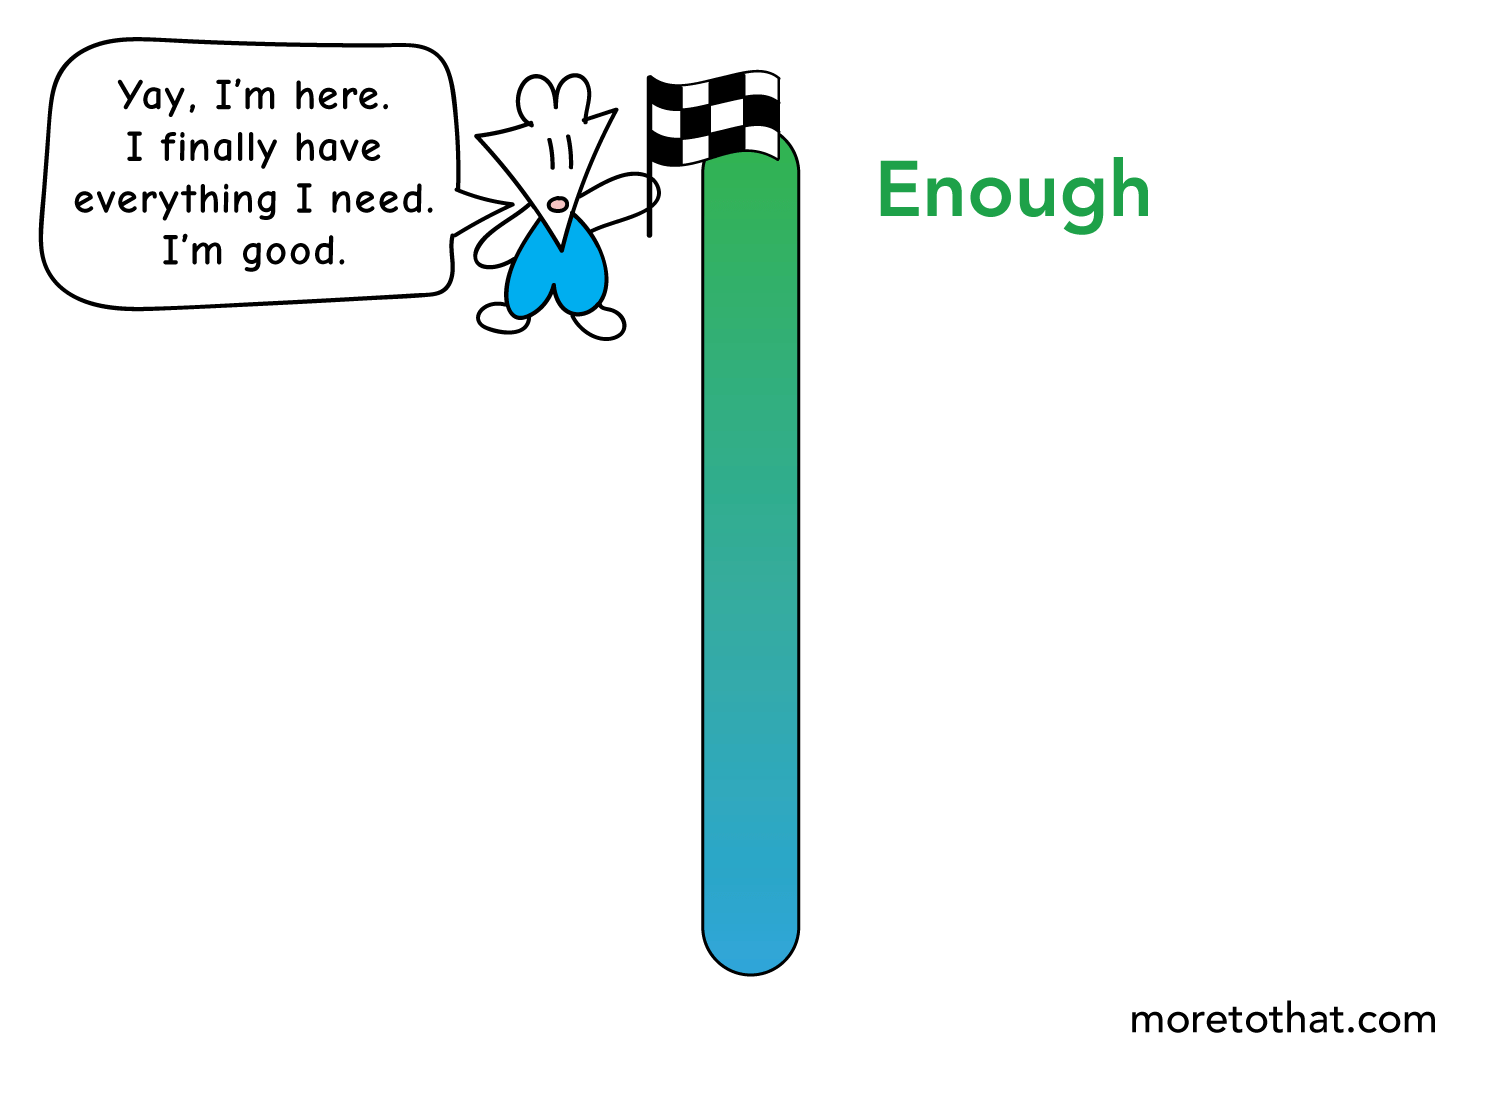 reaching enough - having everything you need